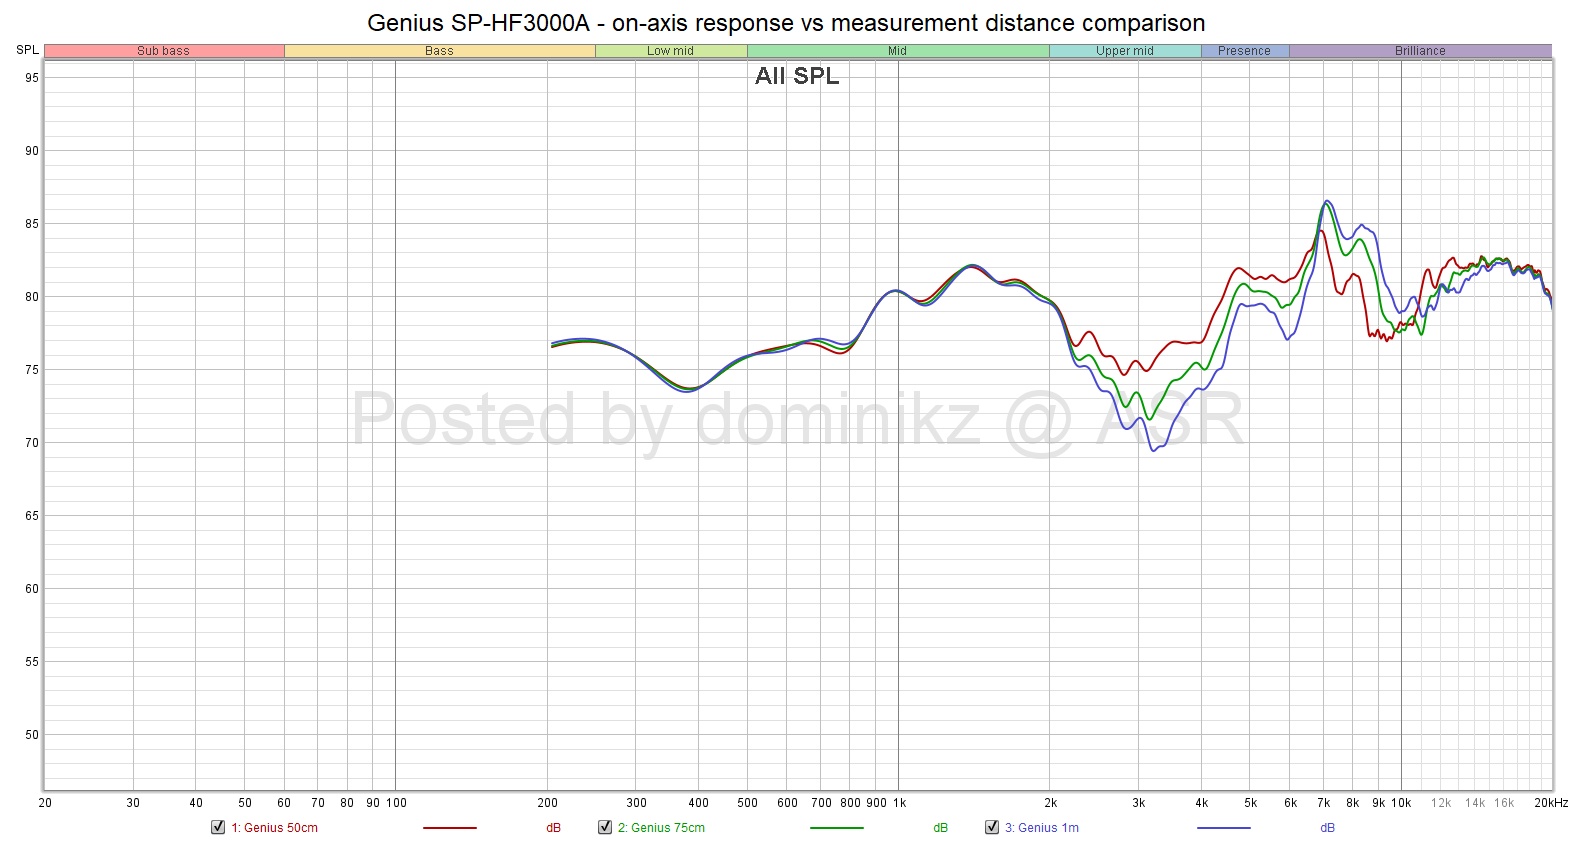 Genius SP-HF3000A - on-axis response vs measurement distance comparison.jpg